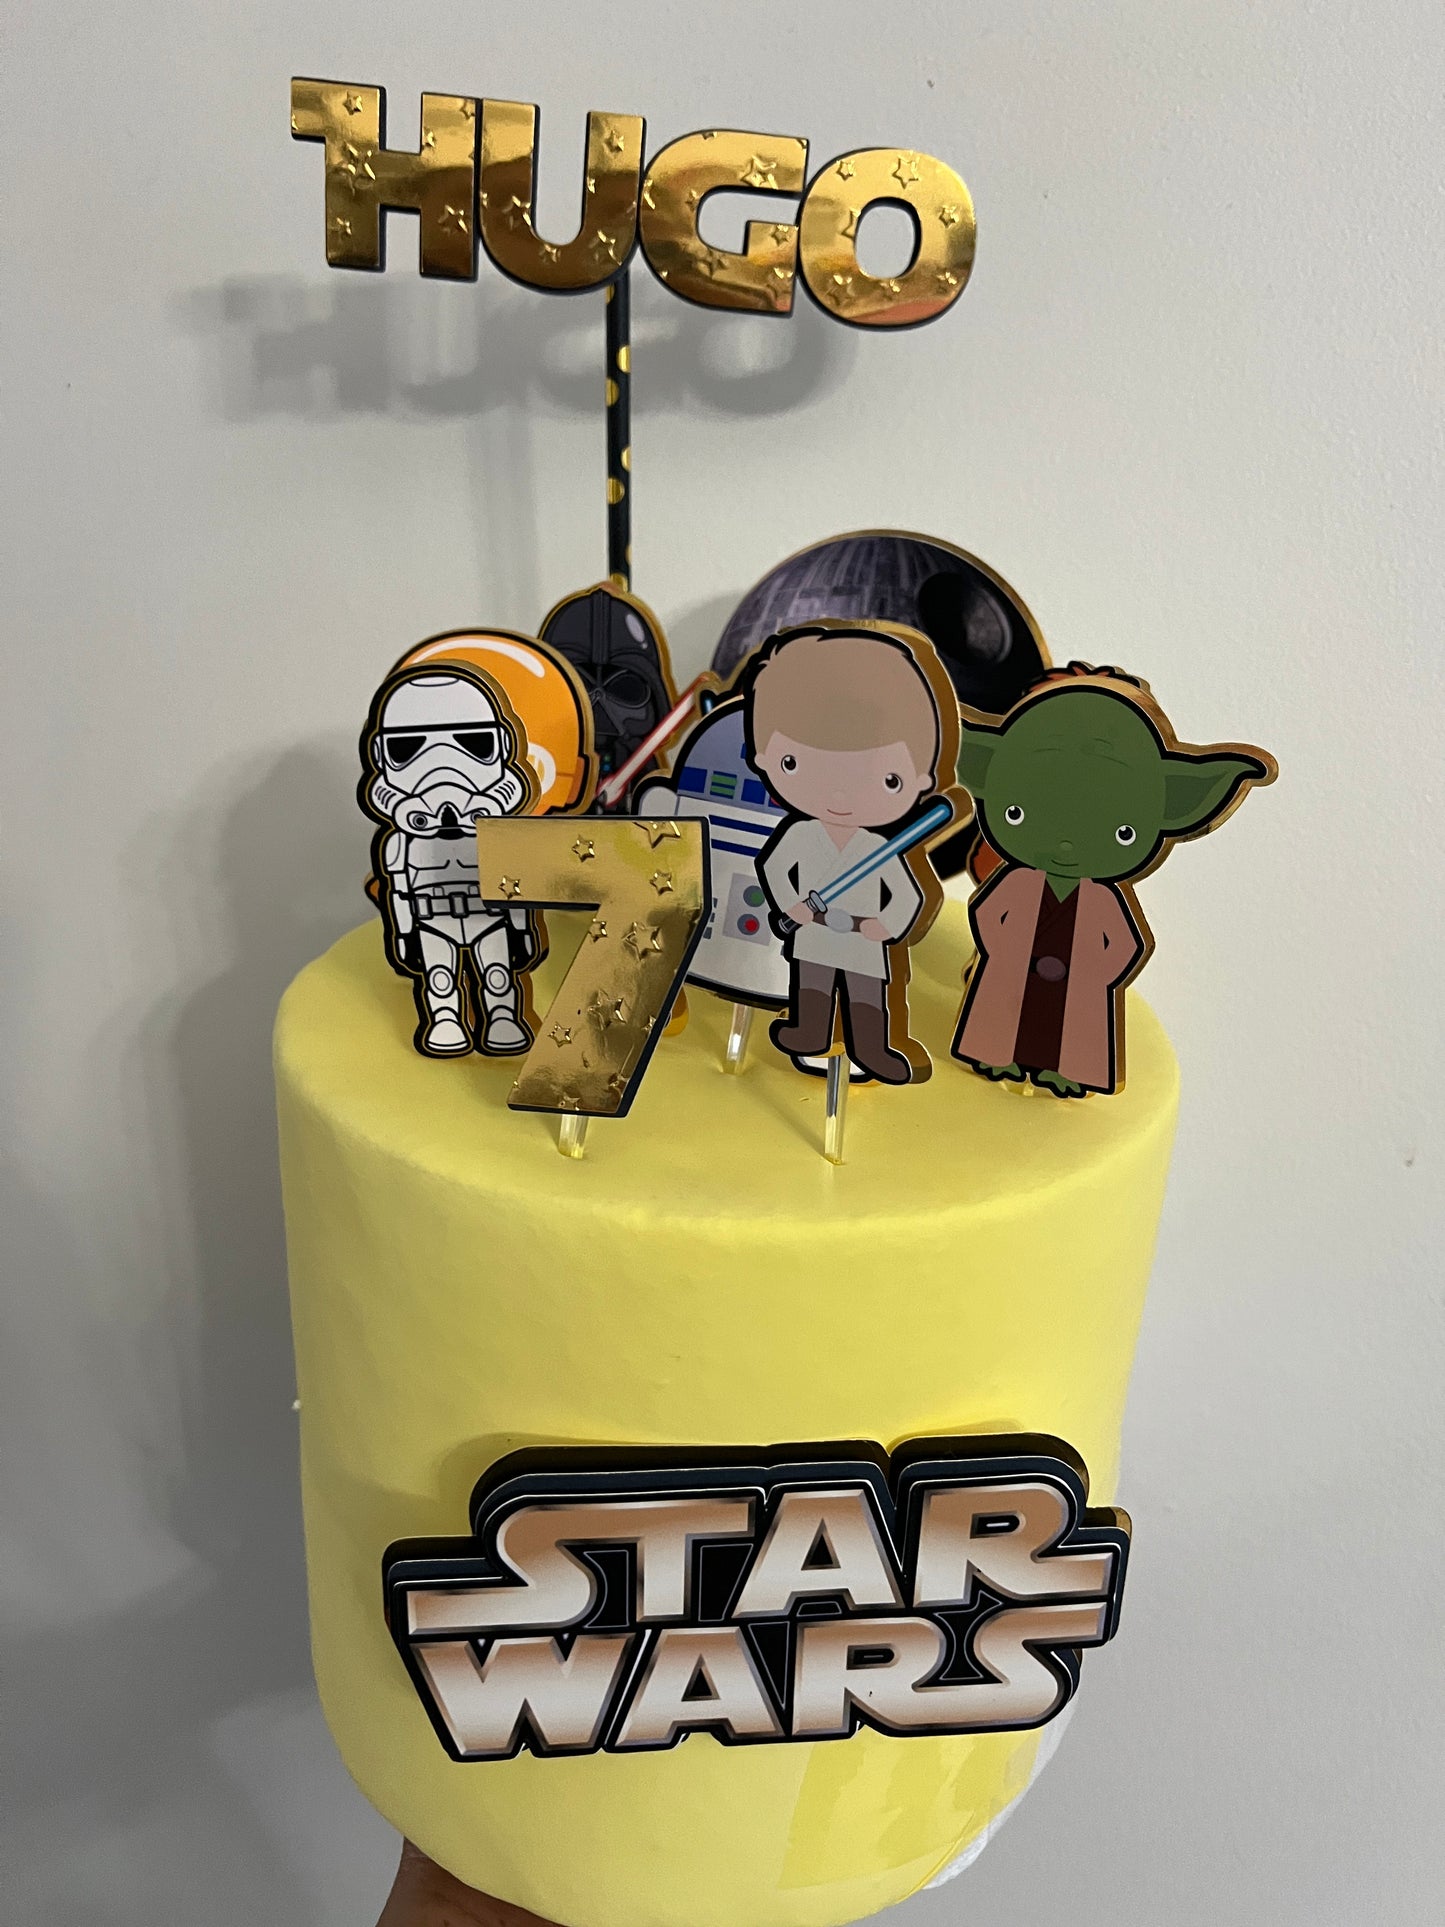 Star wars cake topper